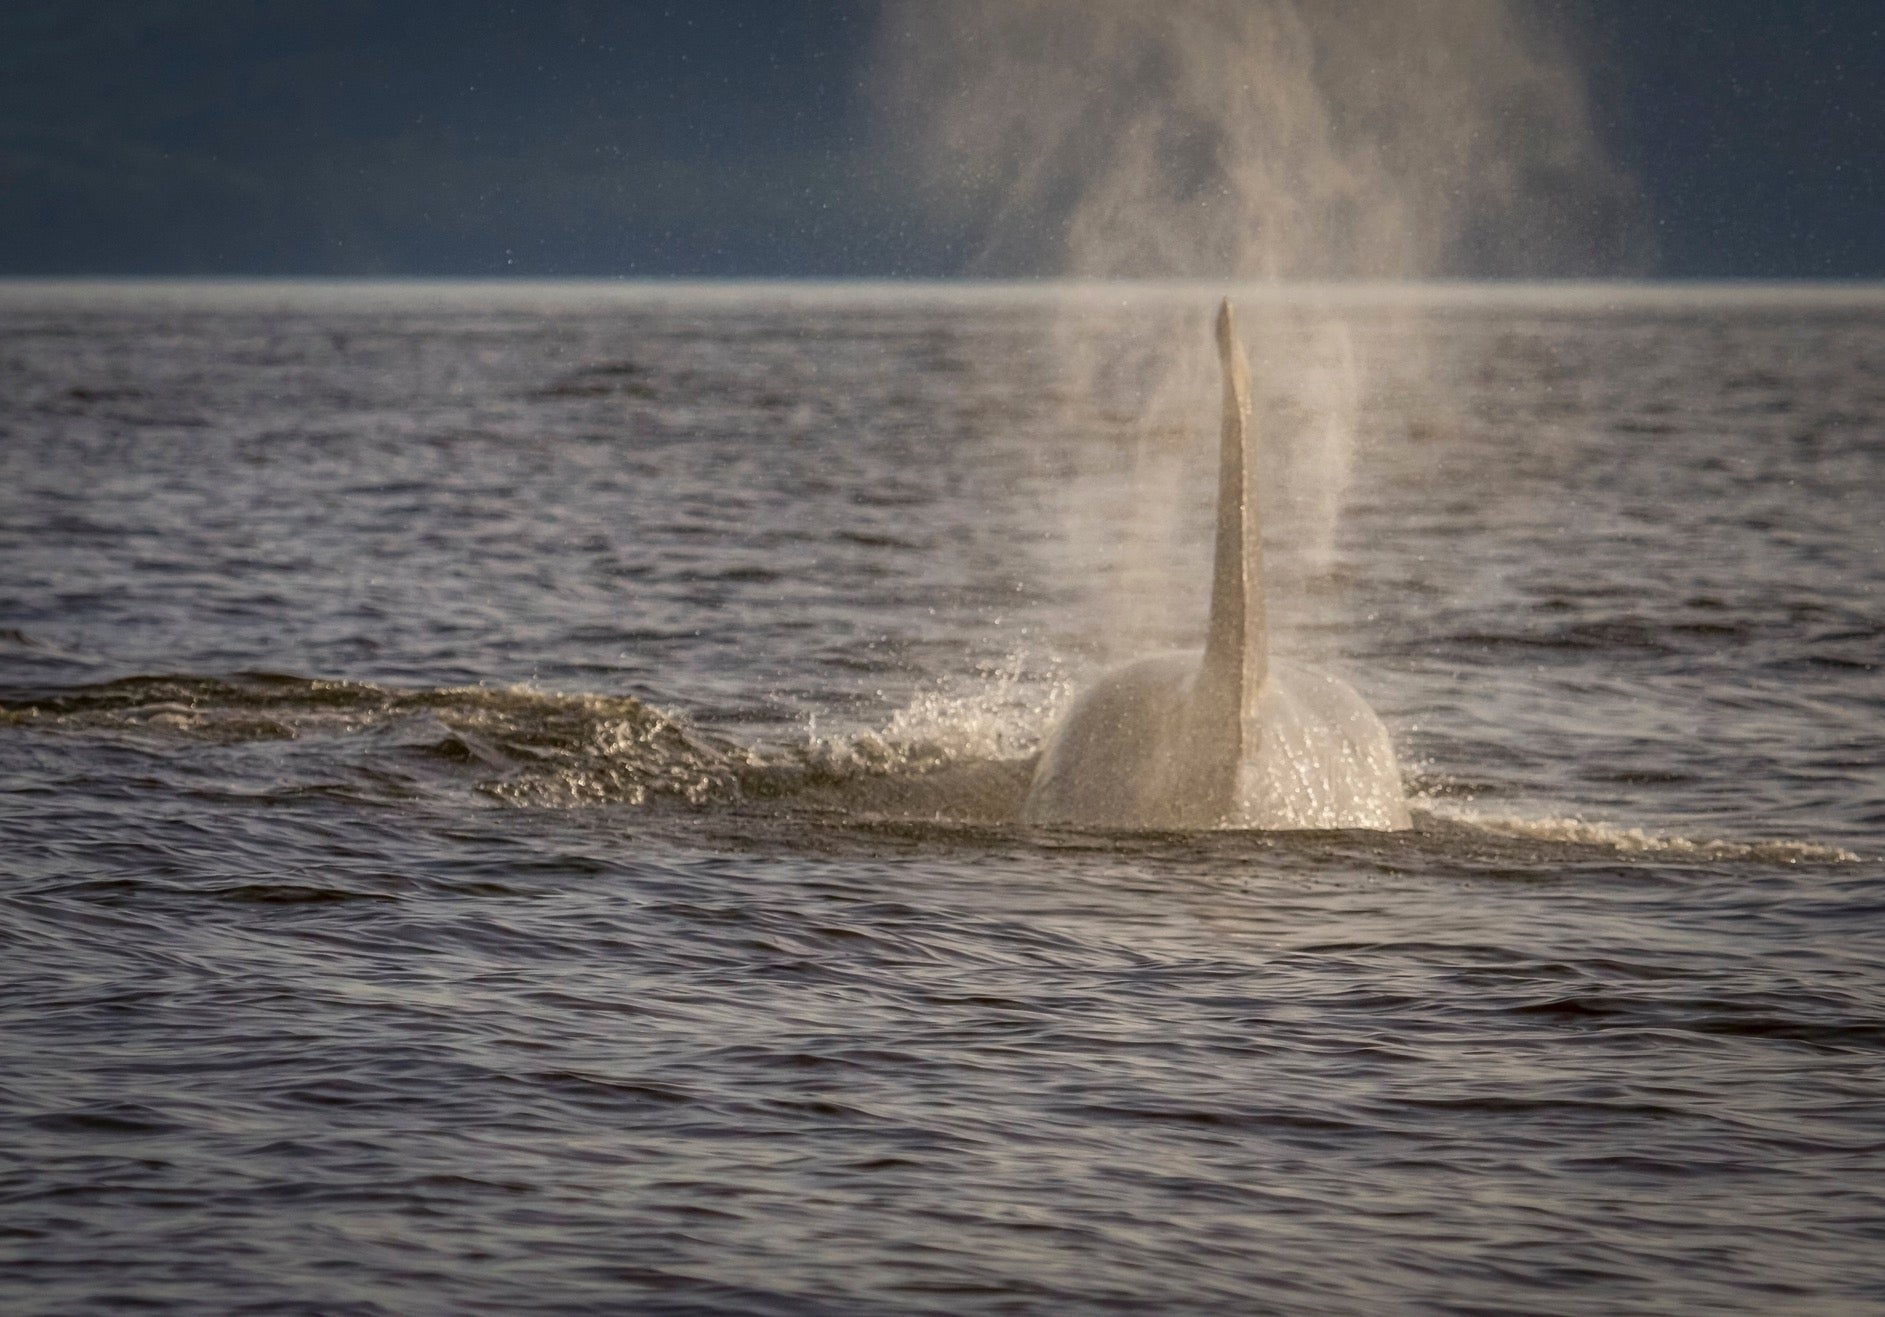 Biggs/transient Orca whales